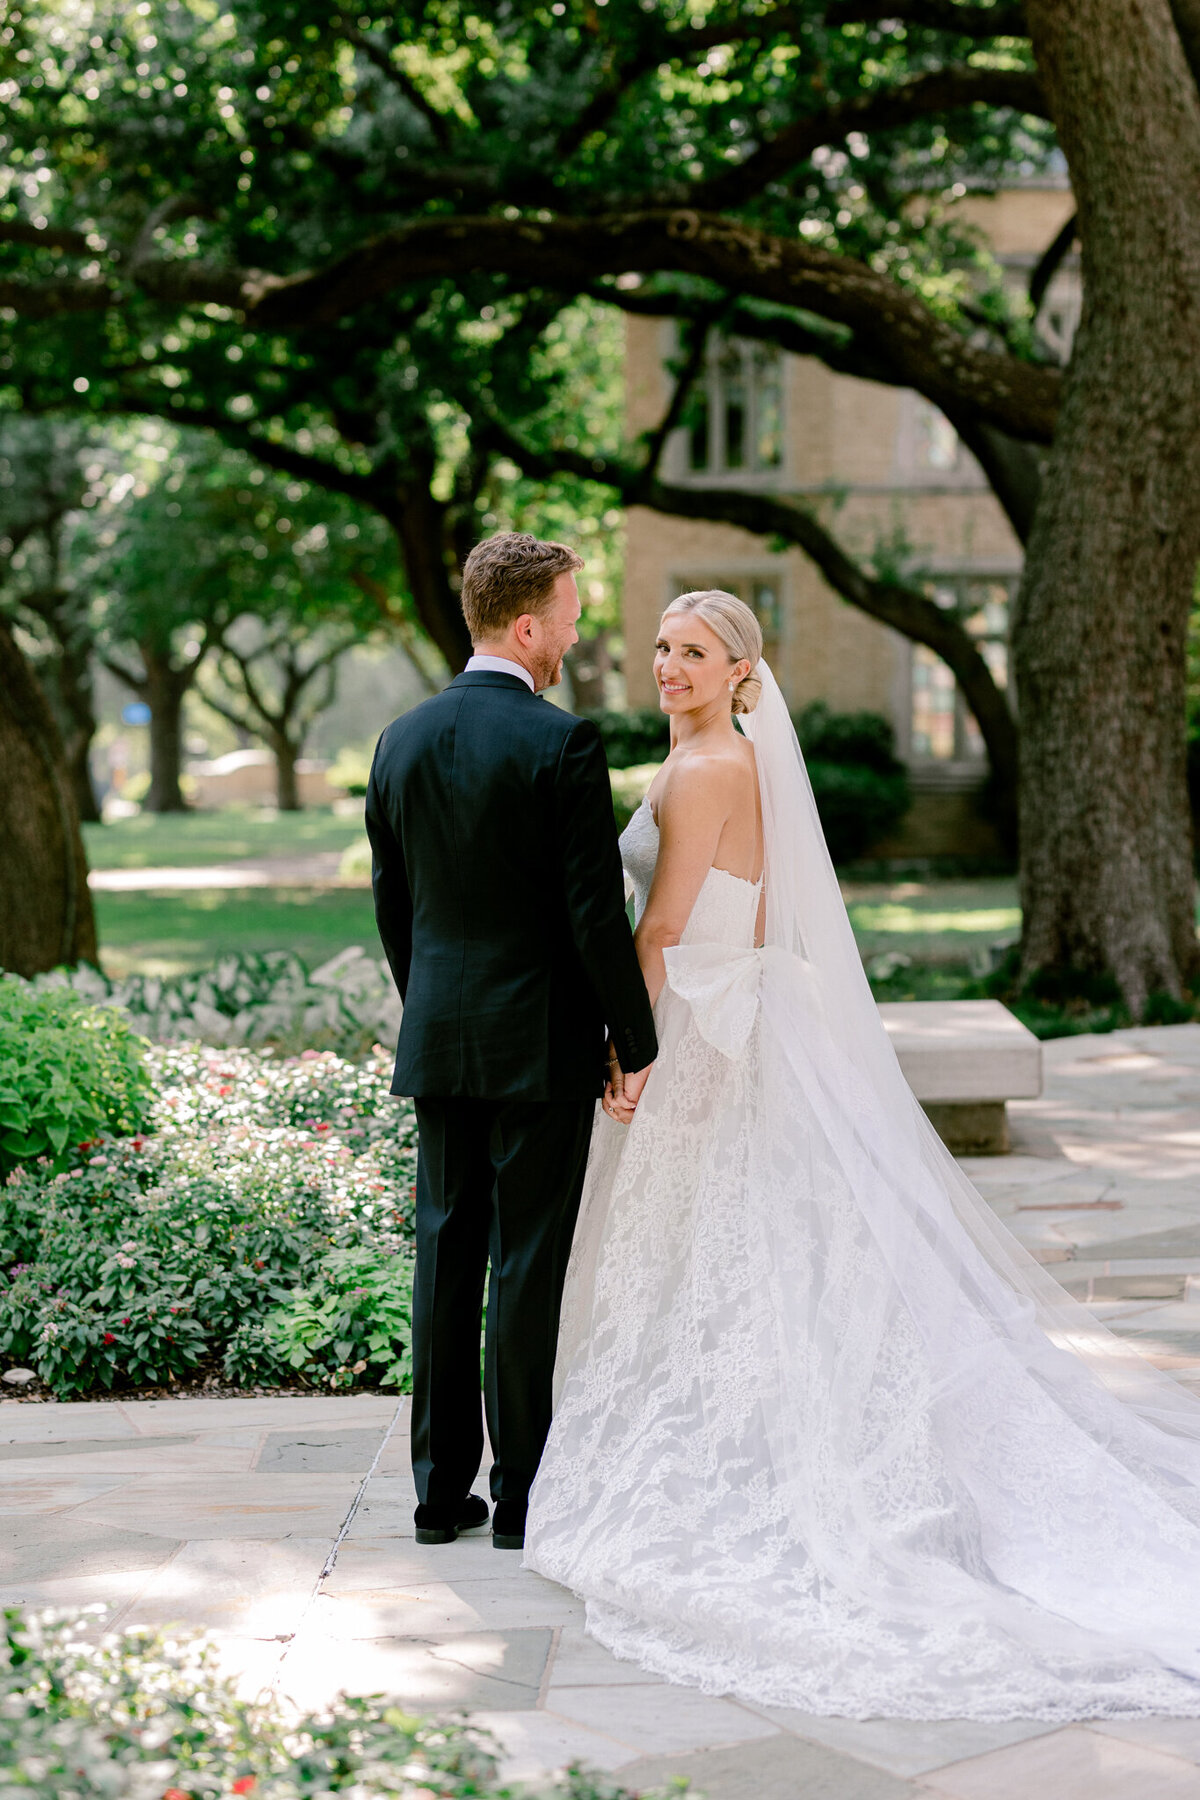 Katelyn & Kyle's Wedding at the Adolphus Hotel | Dallas Wedding Photographer | Sami Kathryn Photography-202